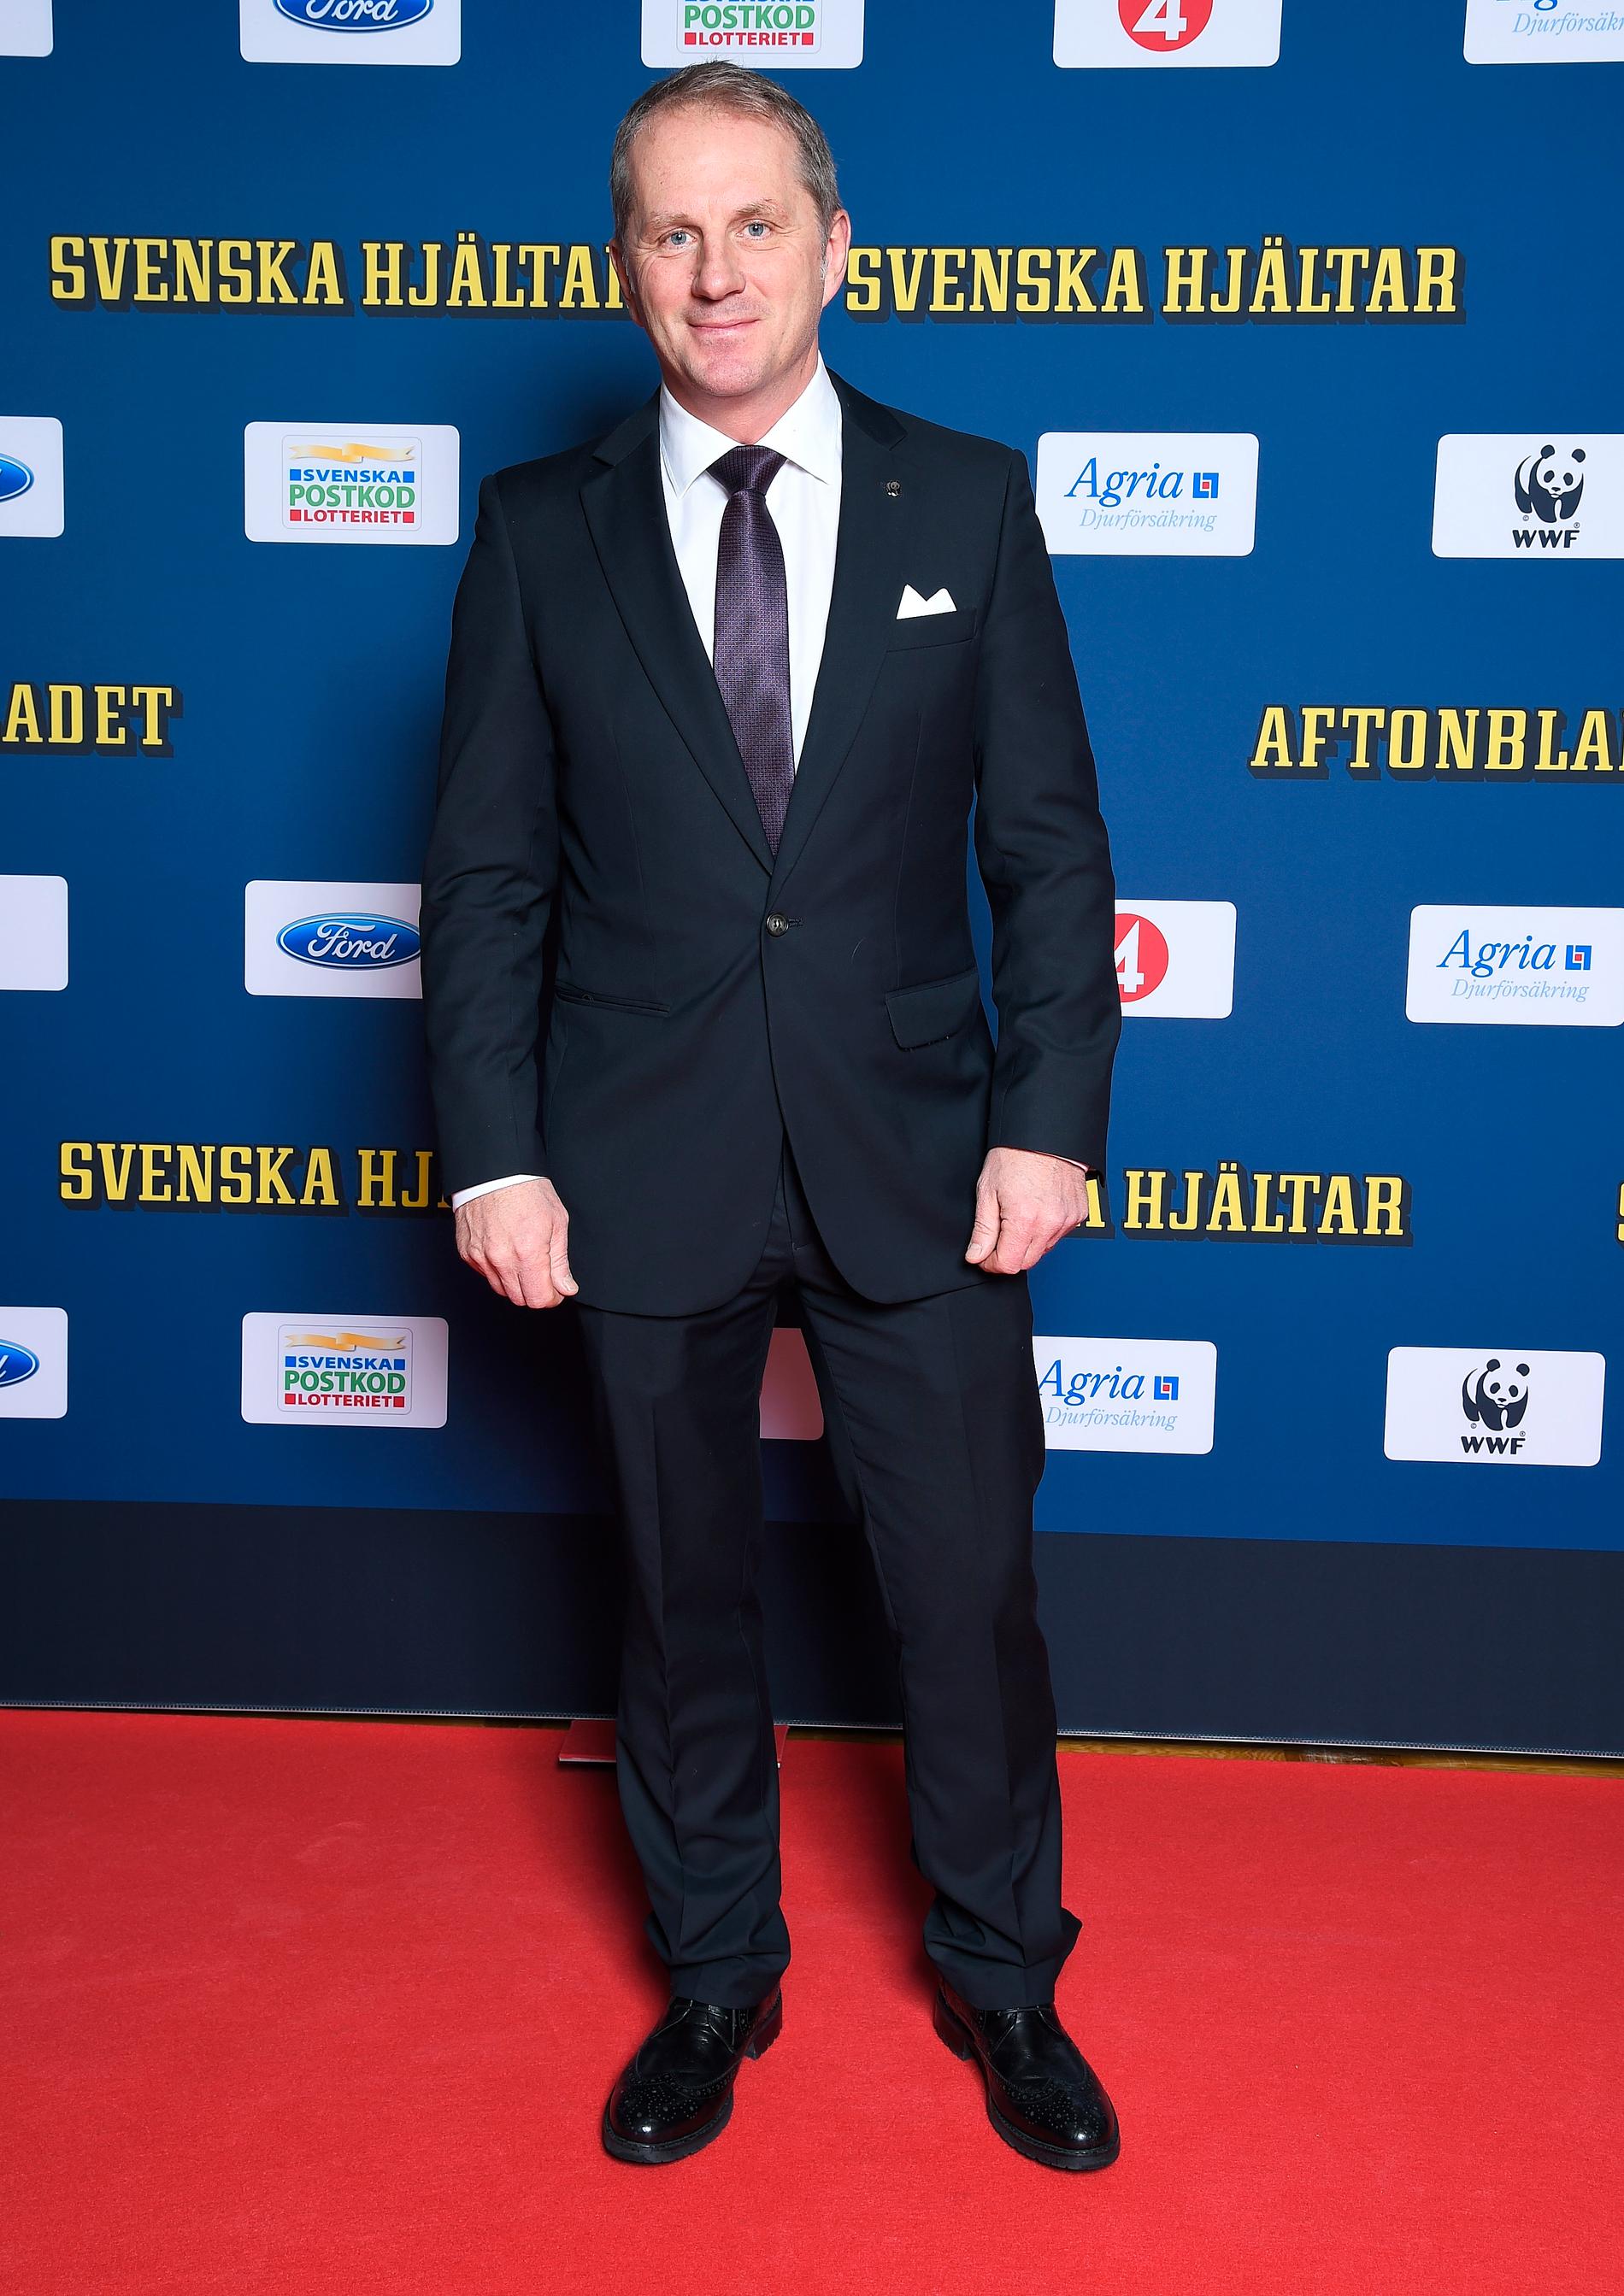 WWF:s generalsekreterare Håkan Wirtén.